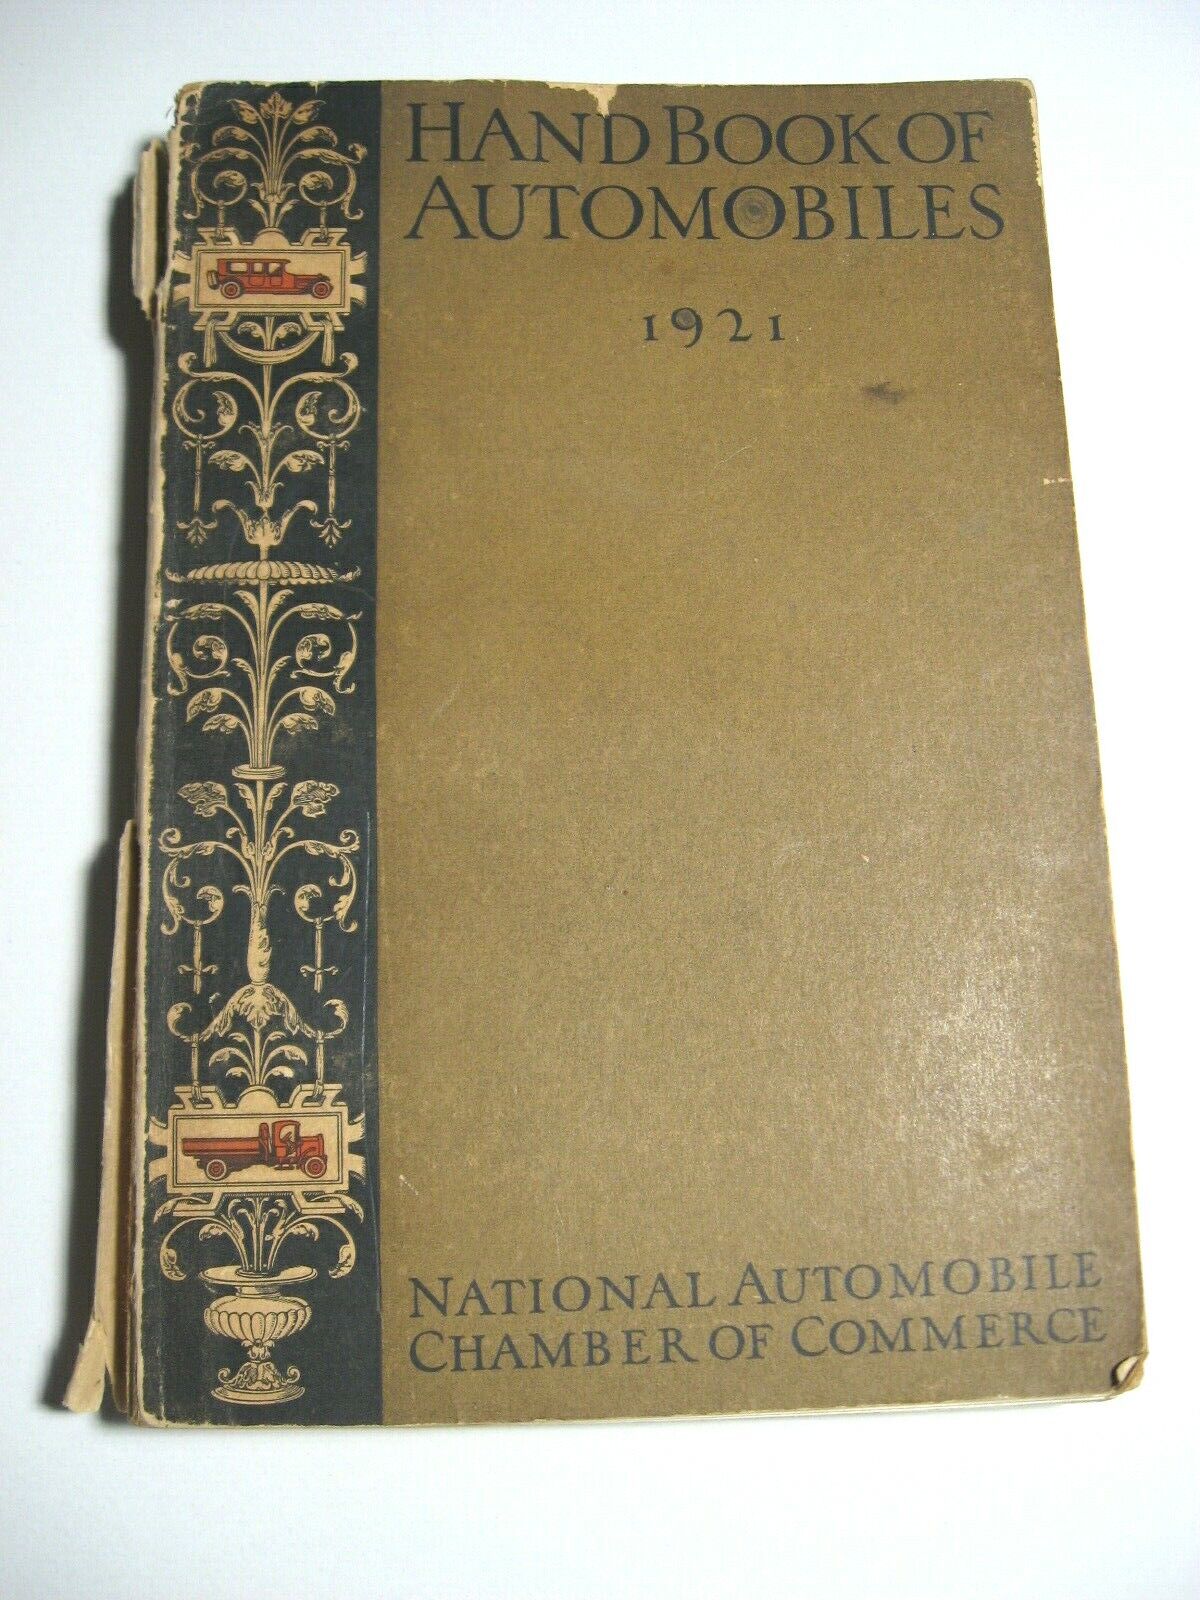 1921 Handbook of Automobiles Hand Book Cadillac Packard Buick Auburn Softcover